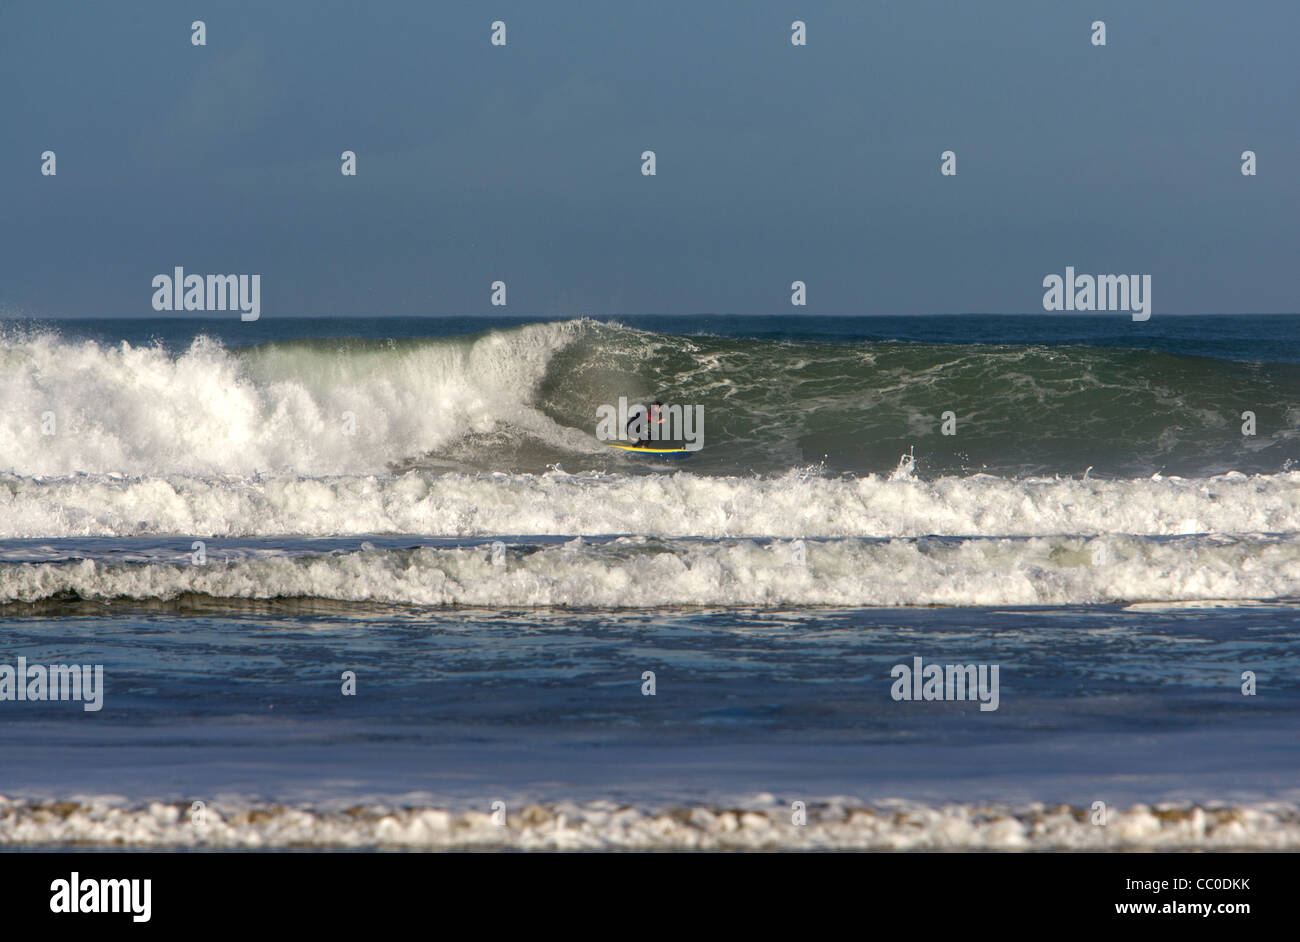 A surfer on a big wave at Porthtowan beach, Cornwall. Stock Photo